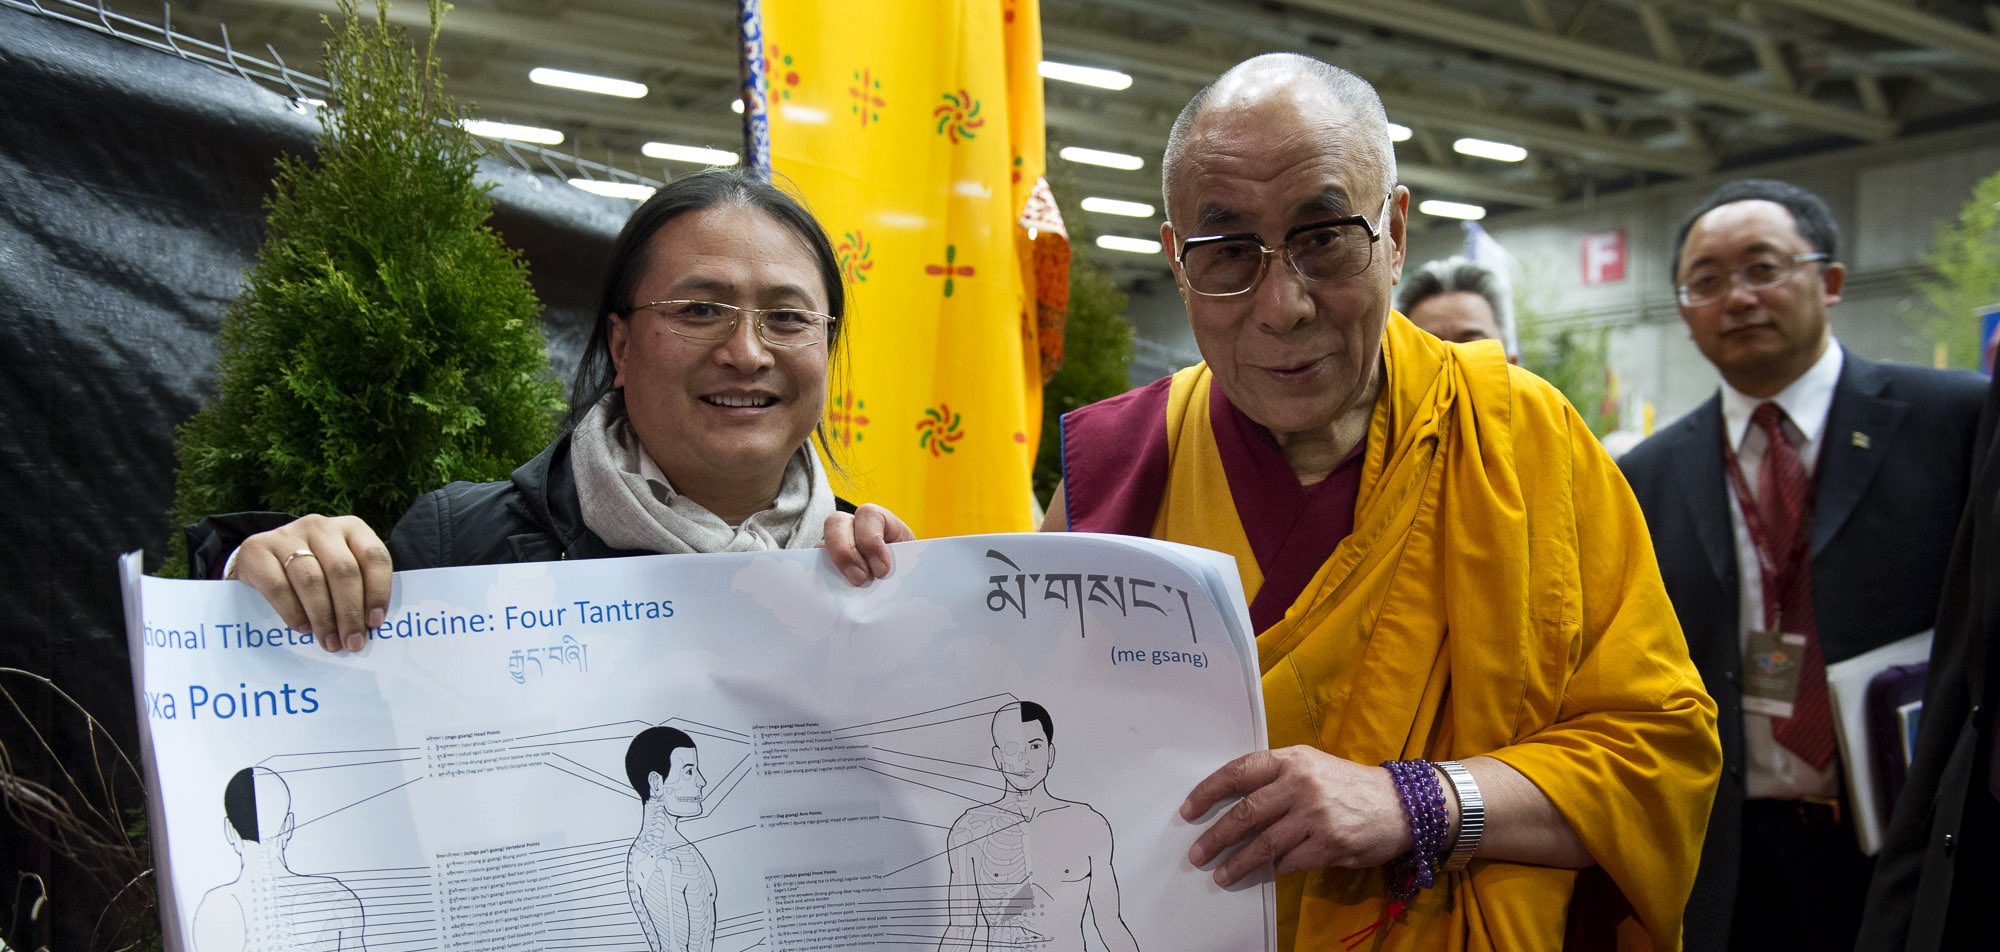 Welcome to Sorig Khang International: Foundation for Traditional Tibetan Medicine